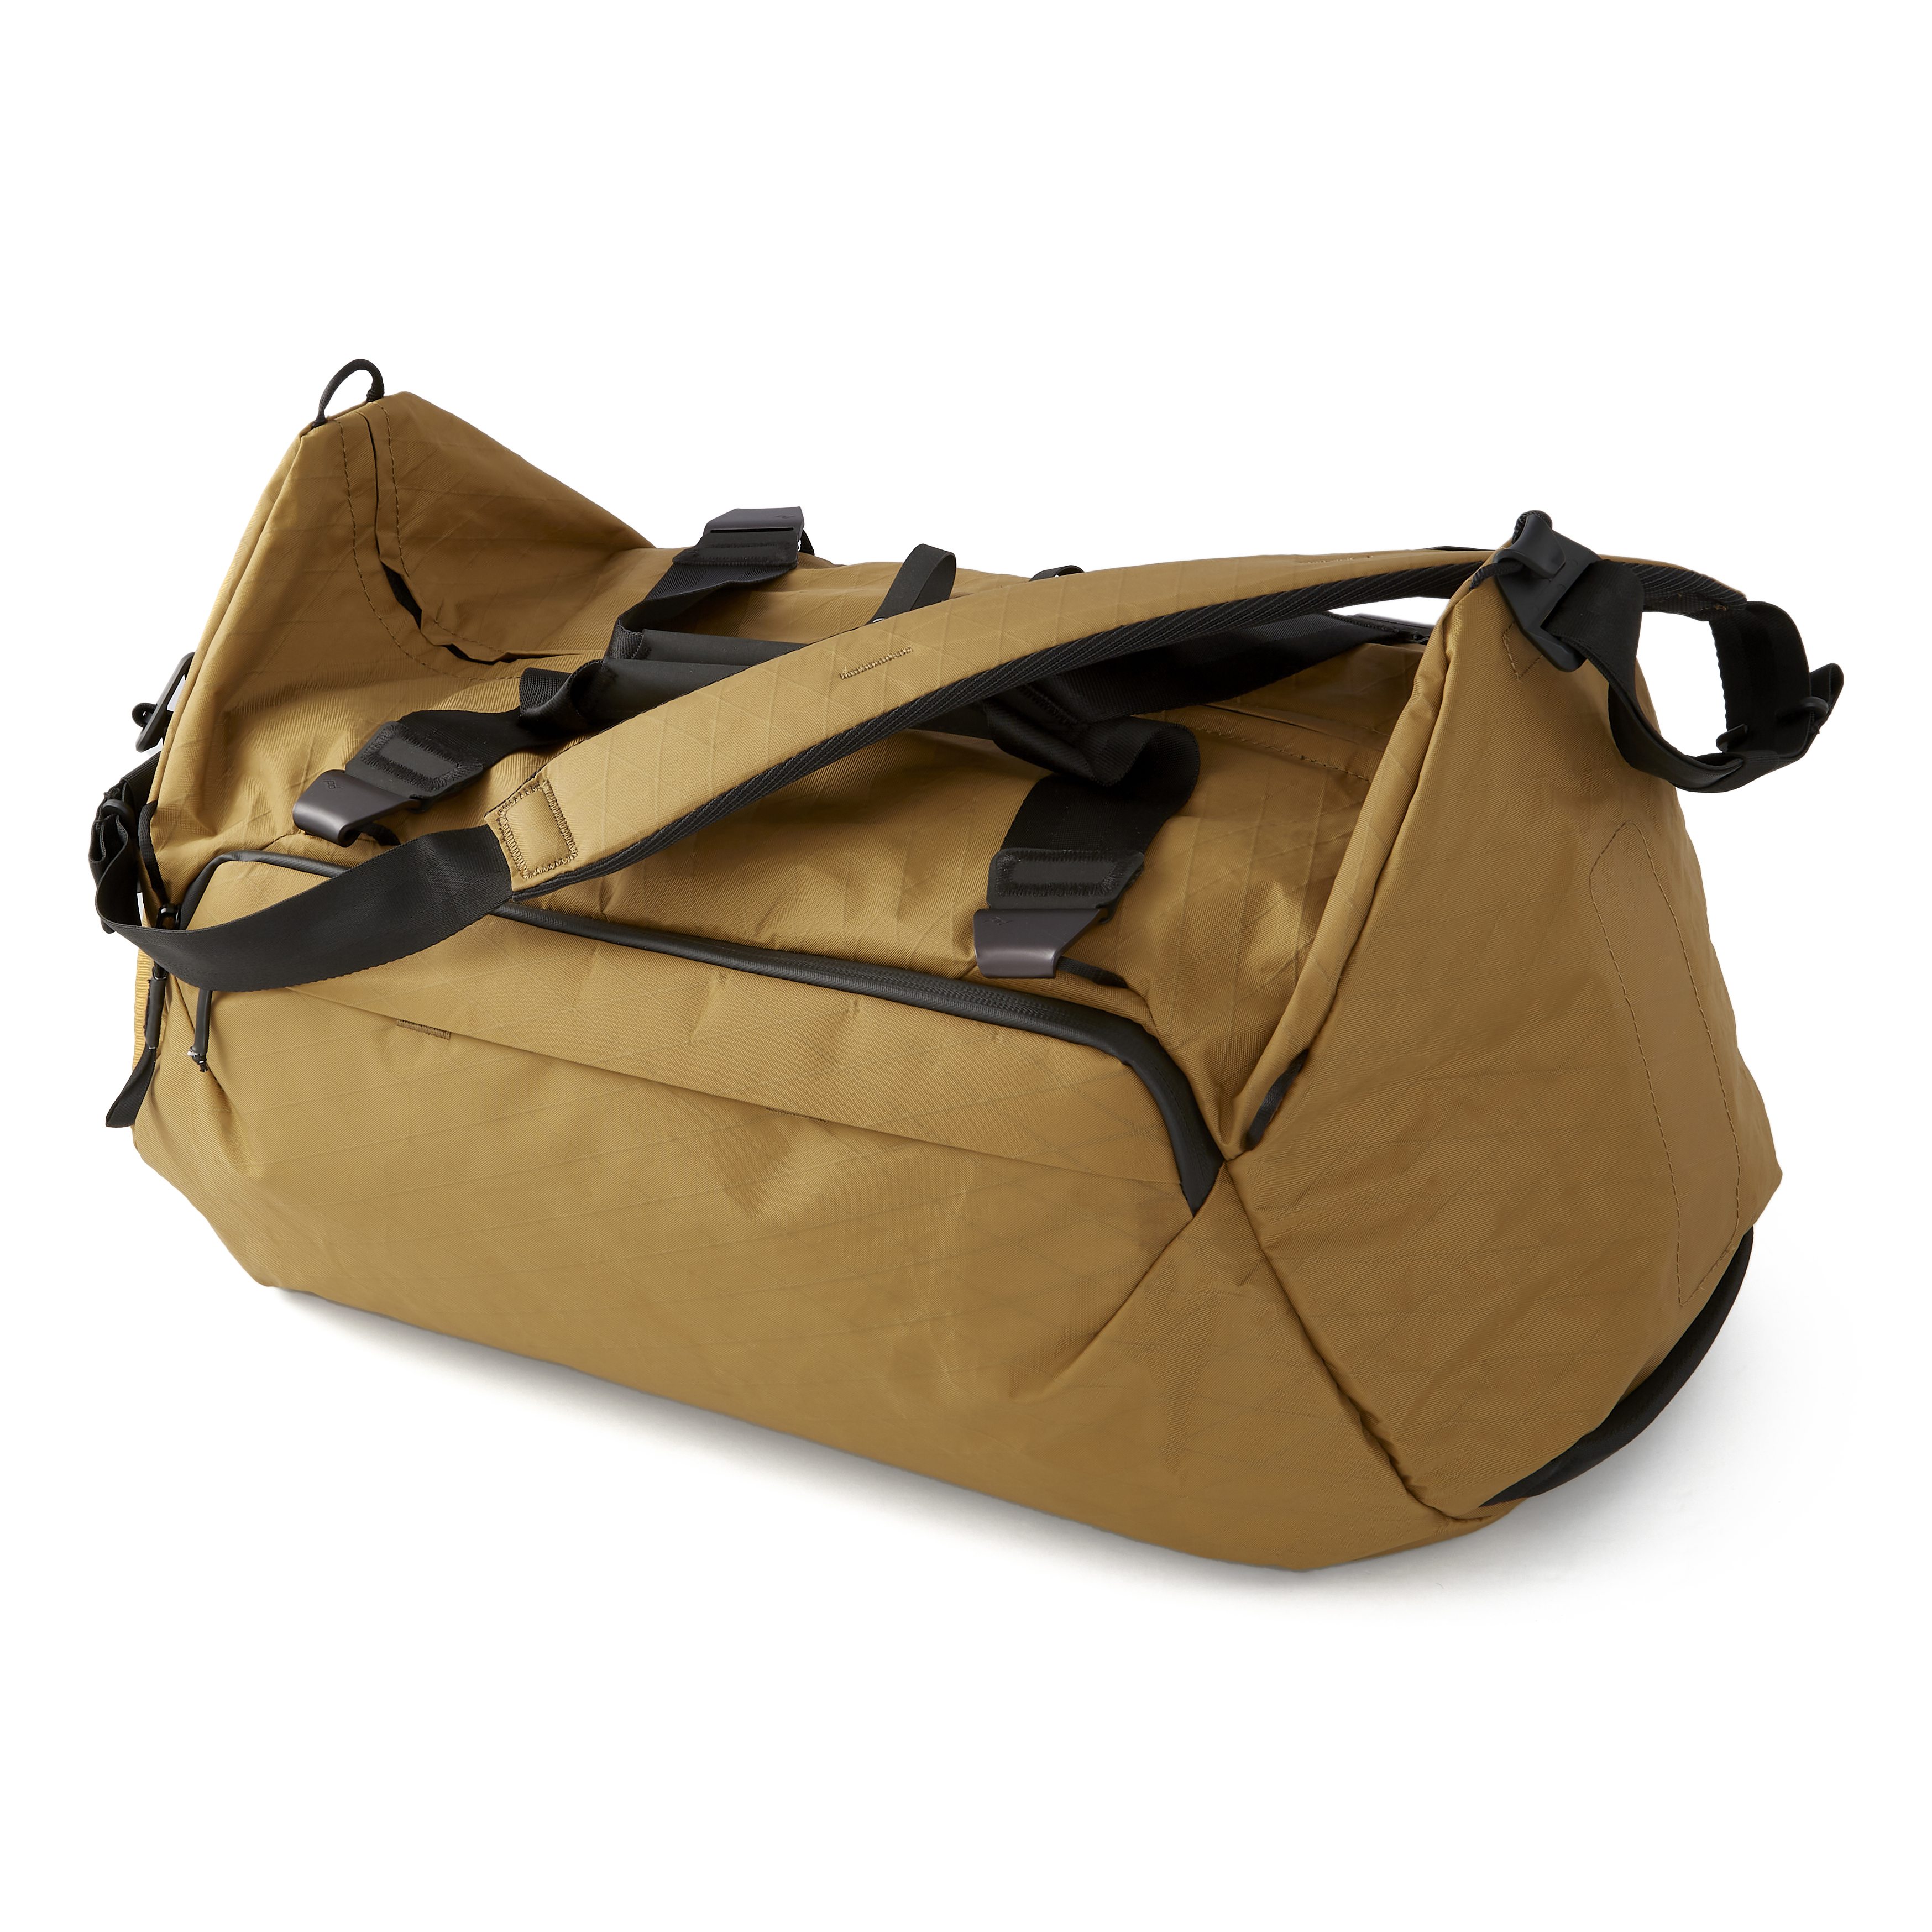 Huckberry x Peak Design - X-Pac Travel Duffel Bag - 35L